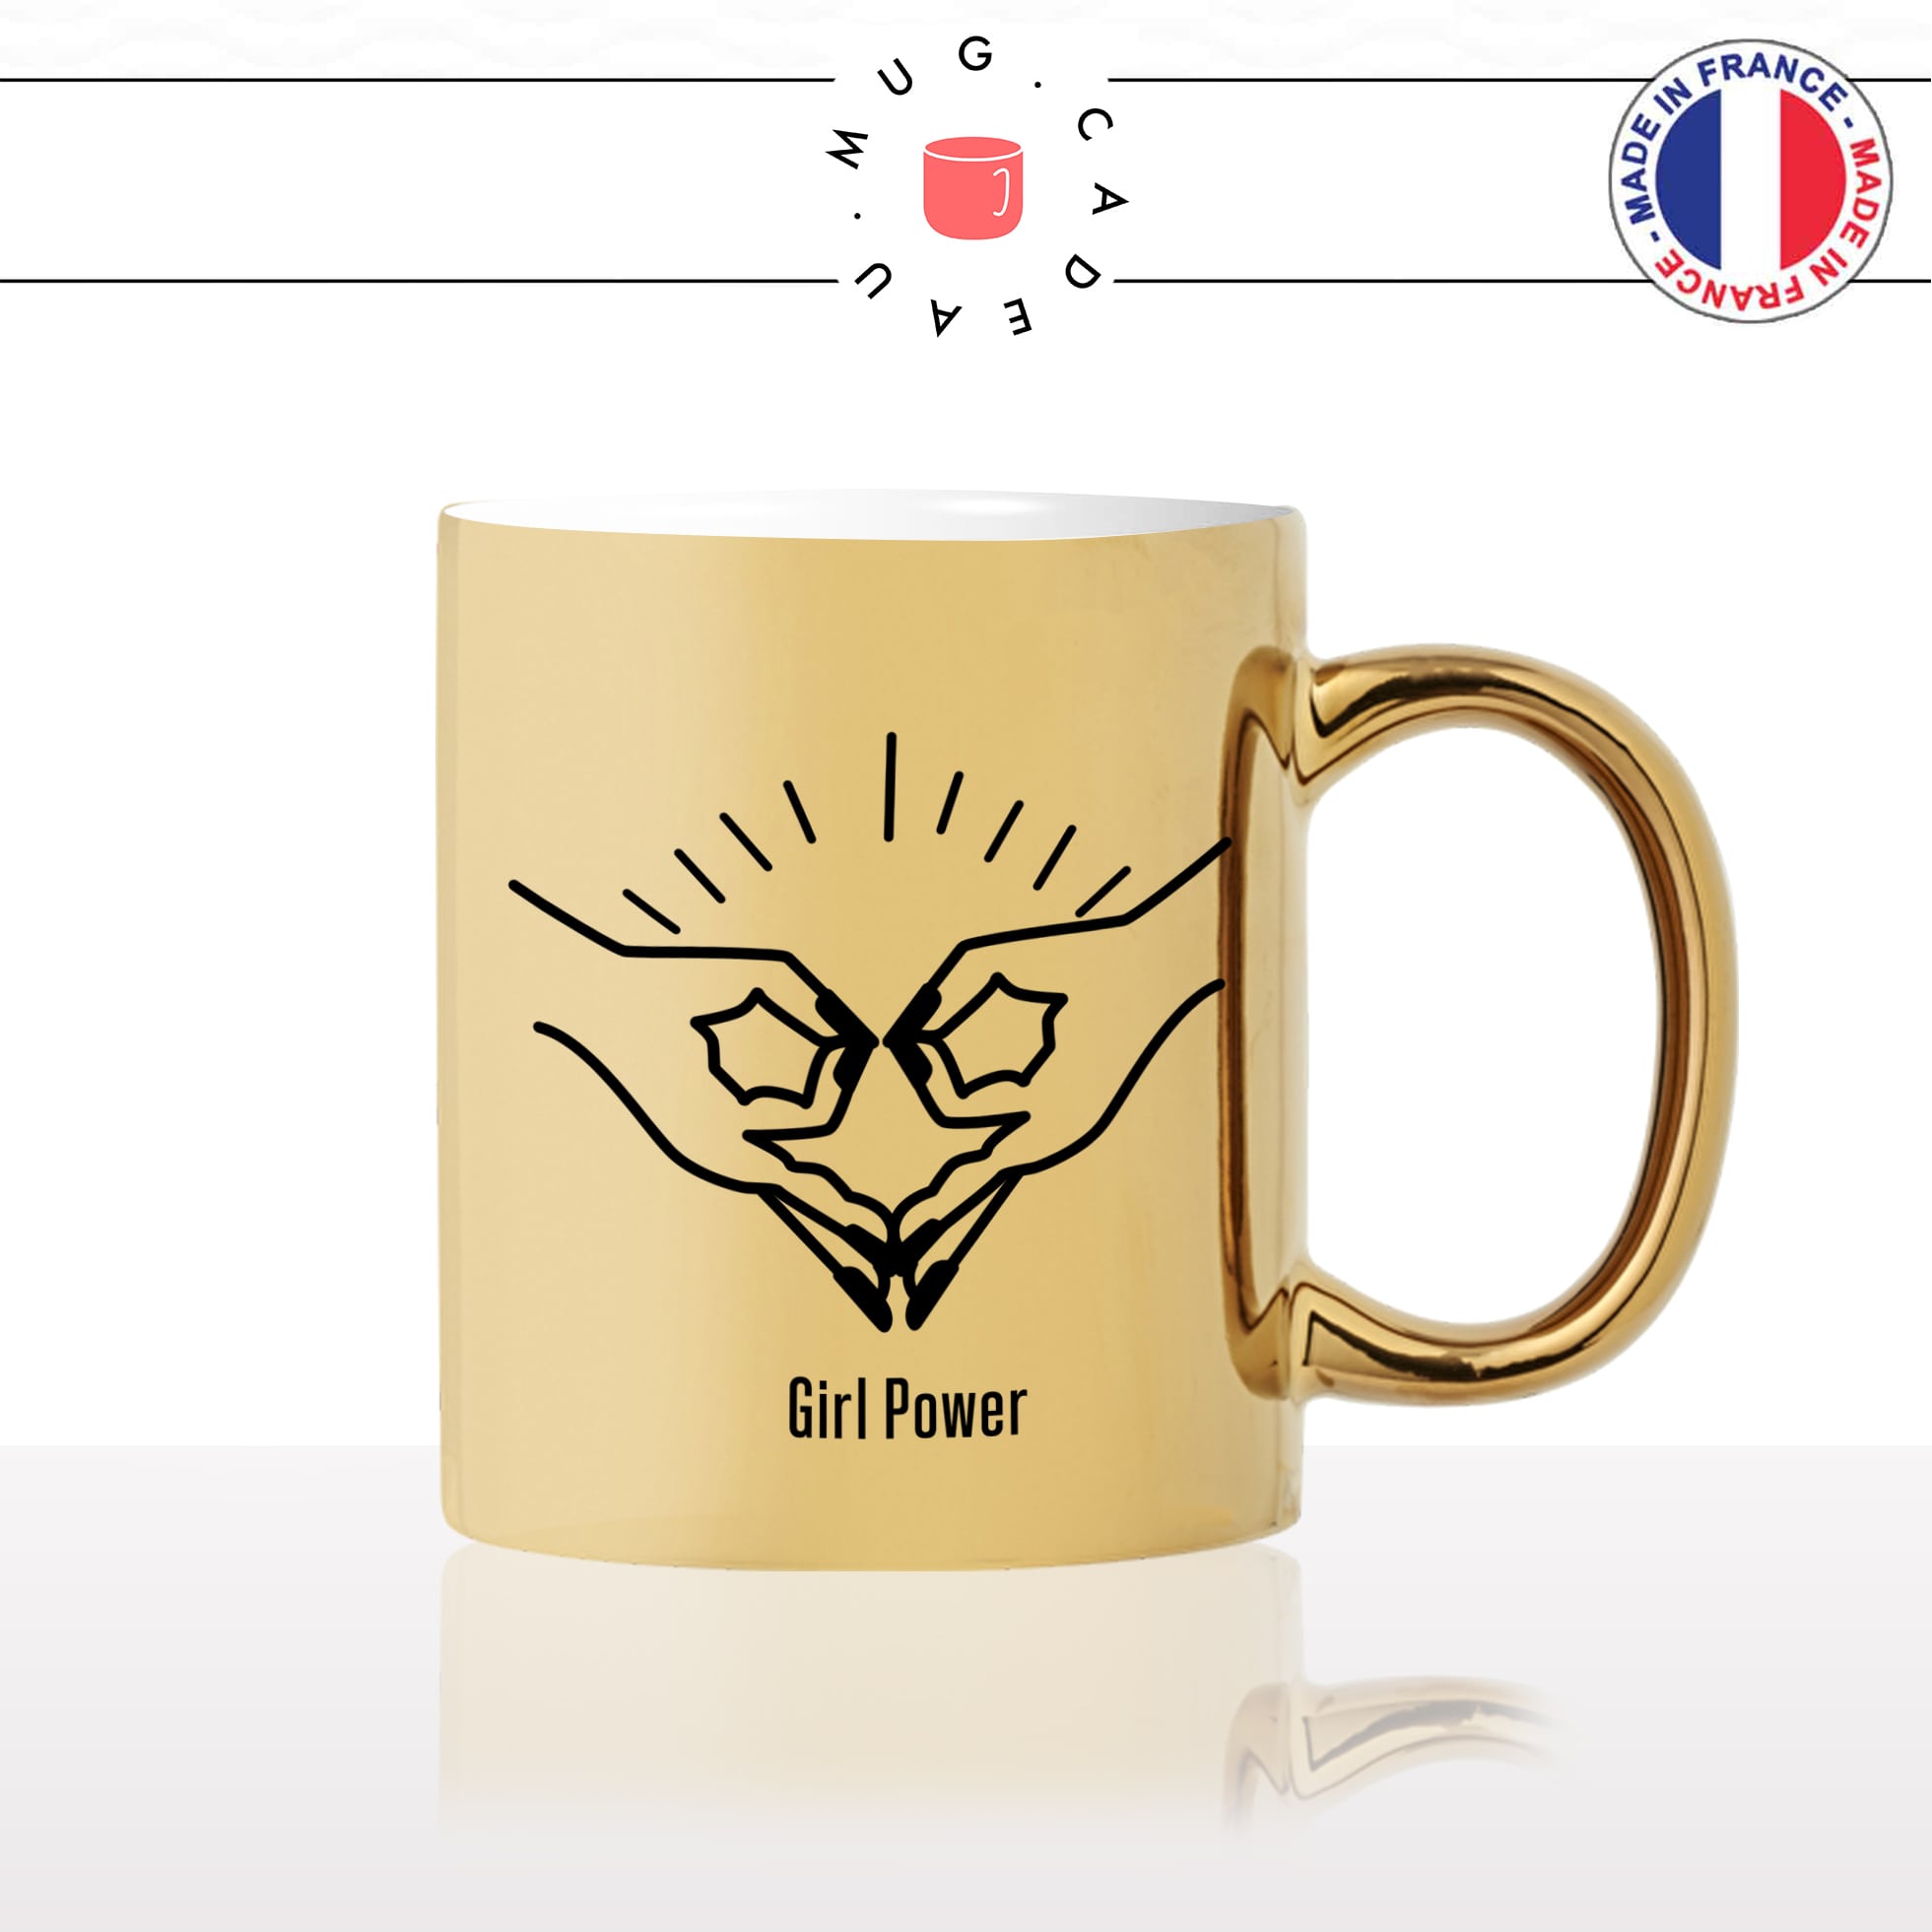 mug-tasse-doré-or-gold-girl-power-ovaires-mains-dessin-feministe-copines-femme-maman-humour-fun-idée-cadeau-personnalisé-café-thé2-min